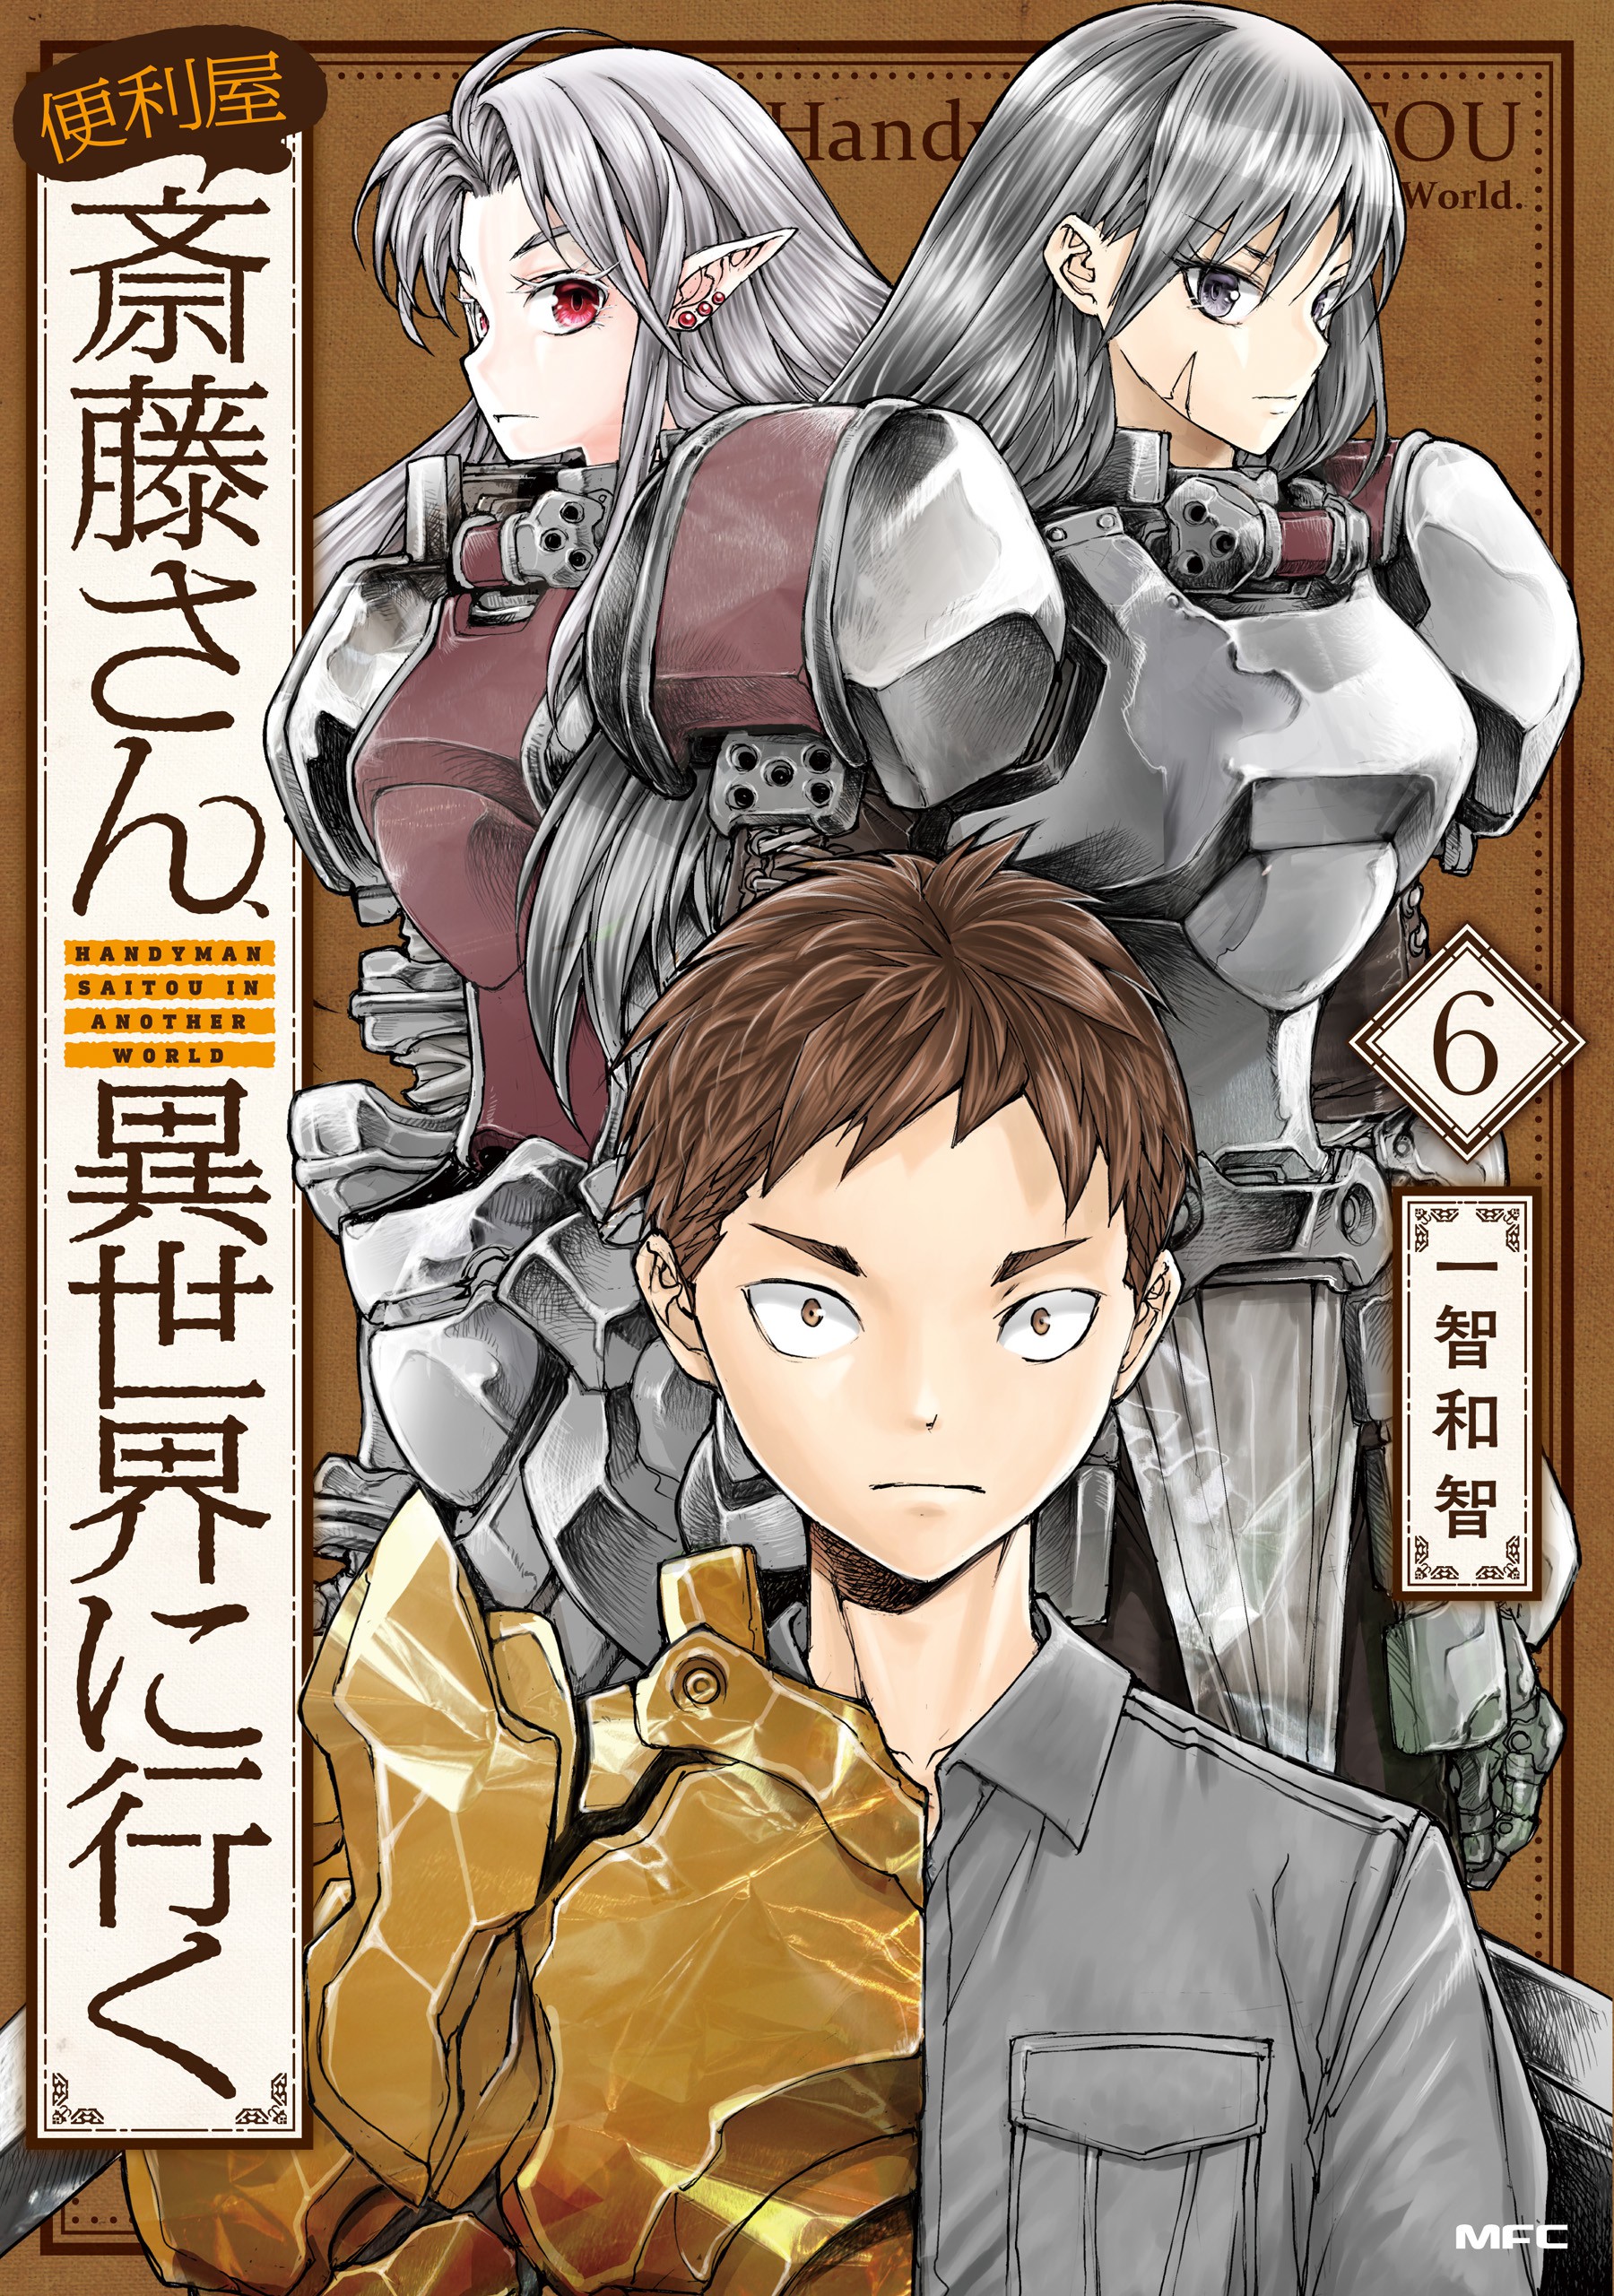 Handyman Saitou in Another World (Manga) - TV Tropes